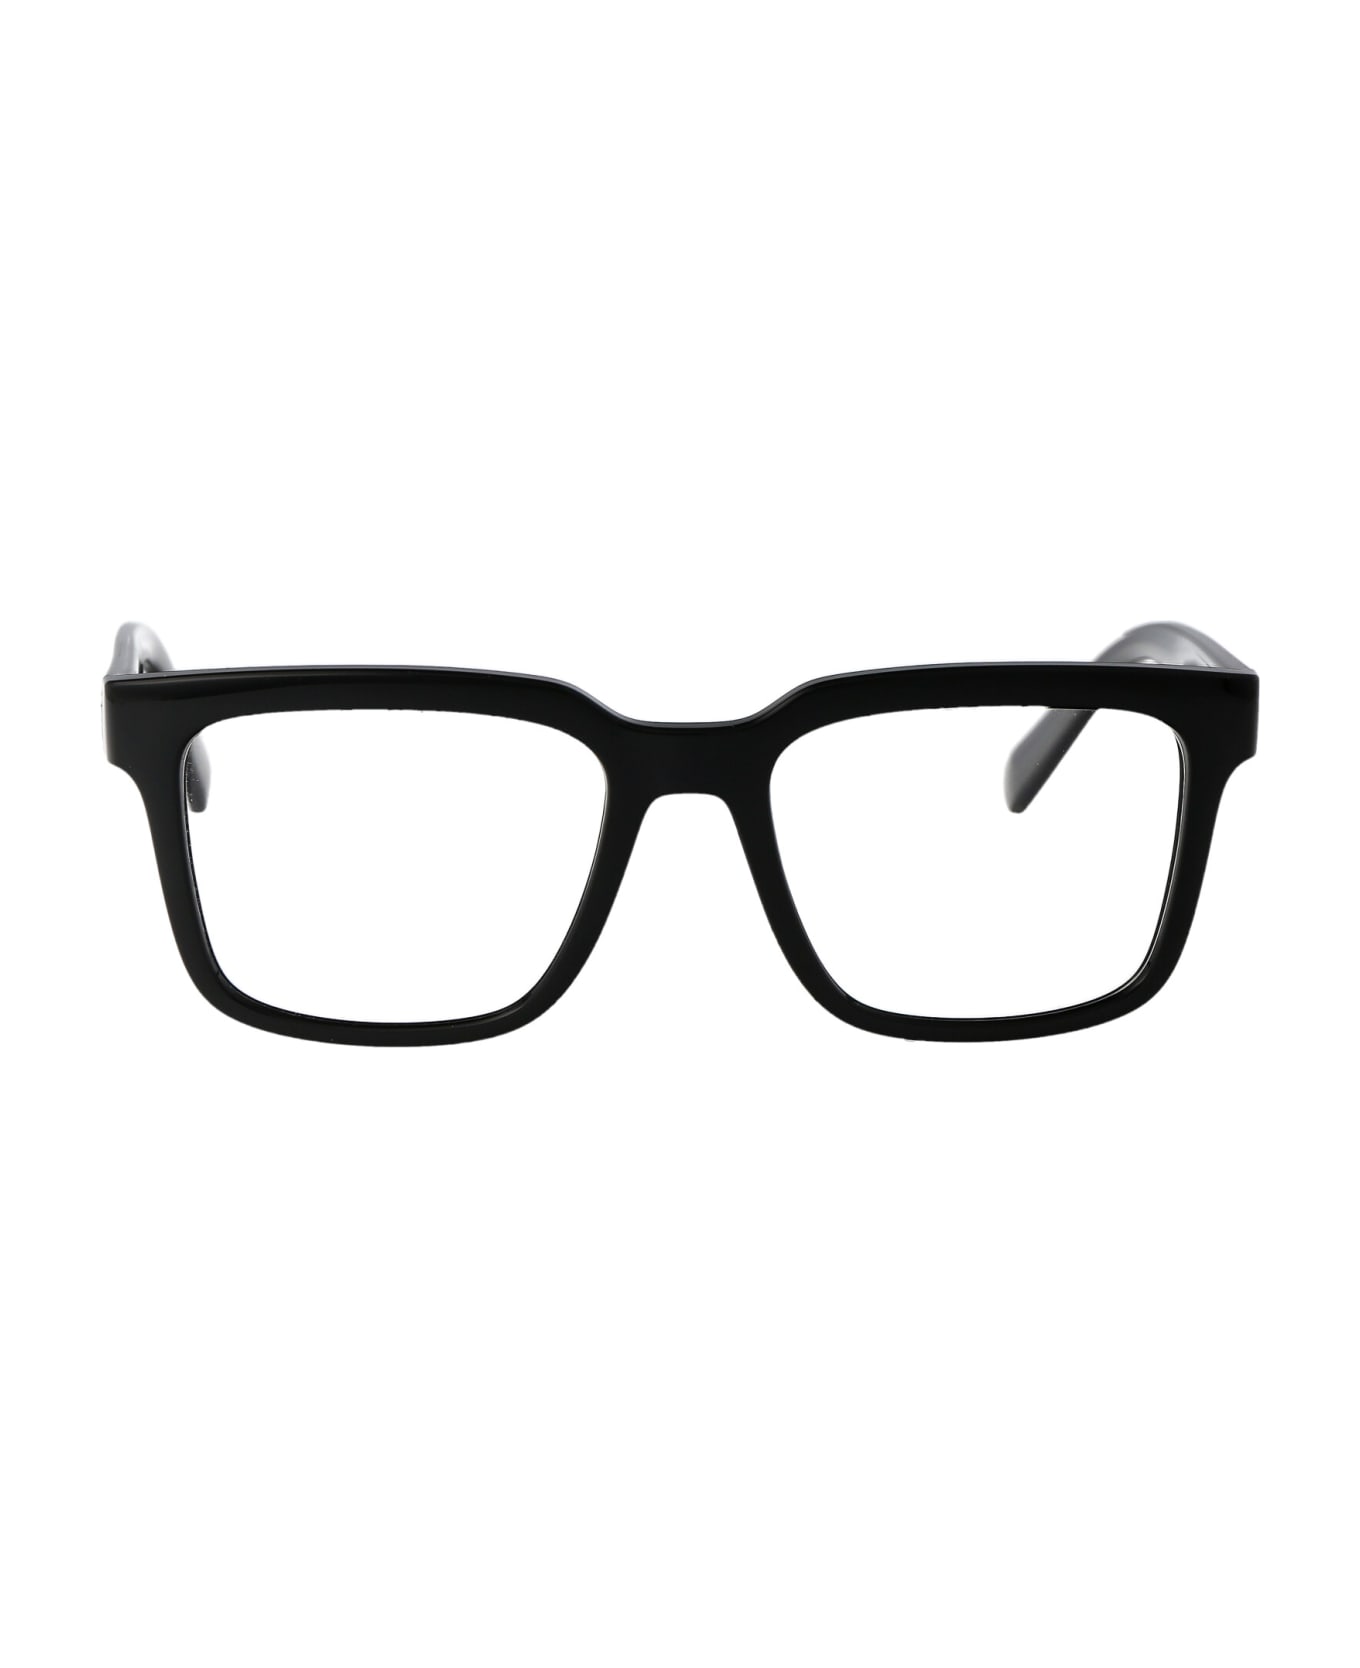 Dolce & Gabbana Eyewear 0dg5101 Glasses - 501 BLACK アイウェア